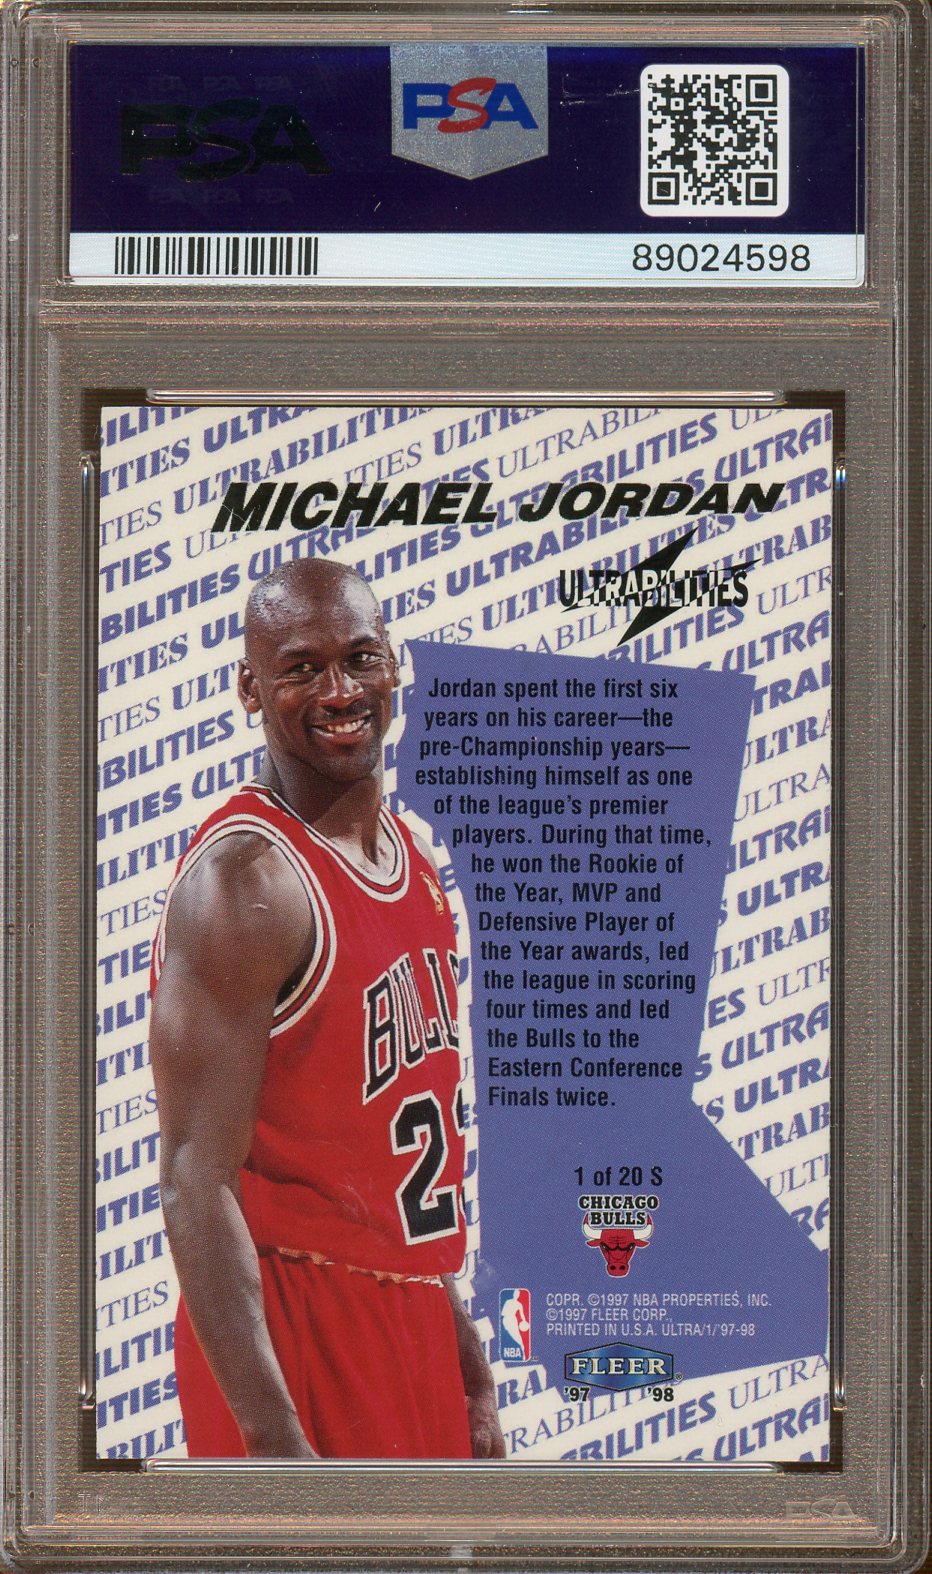 PSA - Mint - 9 - 1997 - Fleer Ultra - Michael Jordan - Ultrabilities-Starter